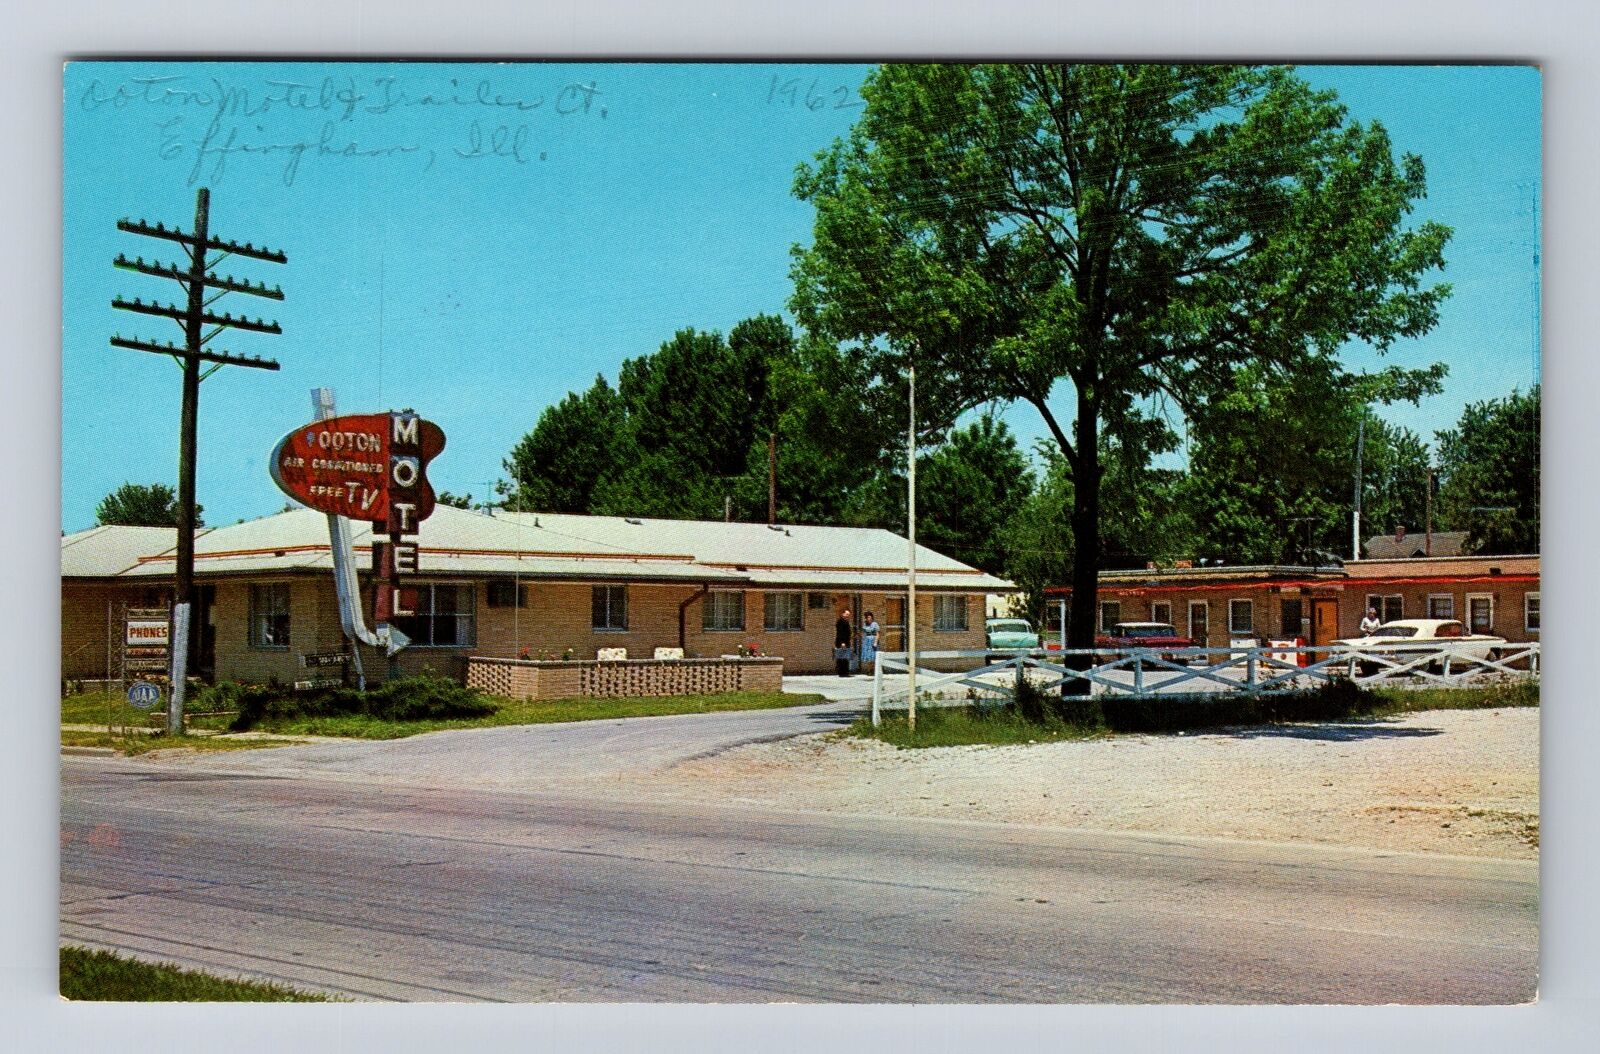 Effingham IL-Illinois, Ooton Motel Advertising, Vintage Souvenir Postcard